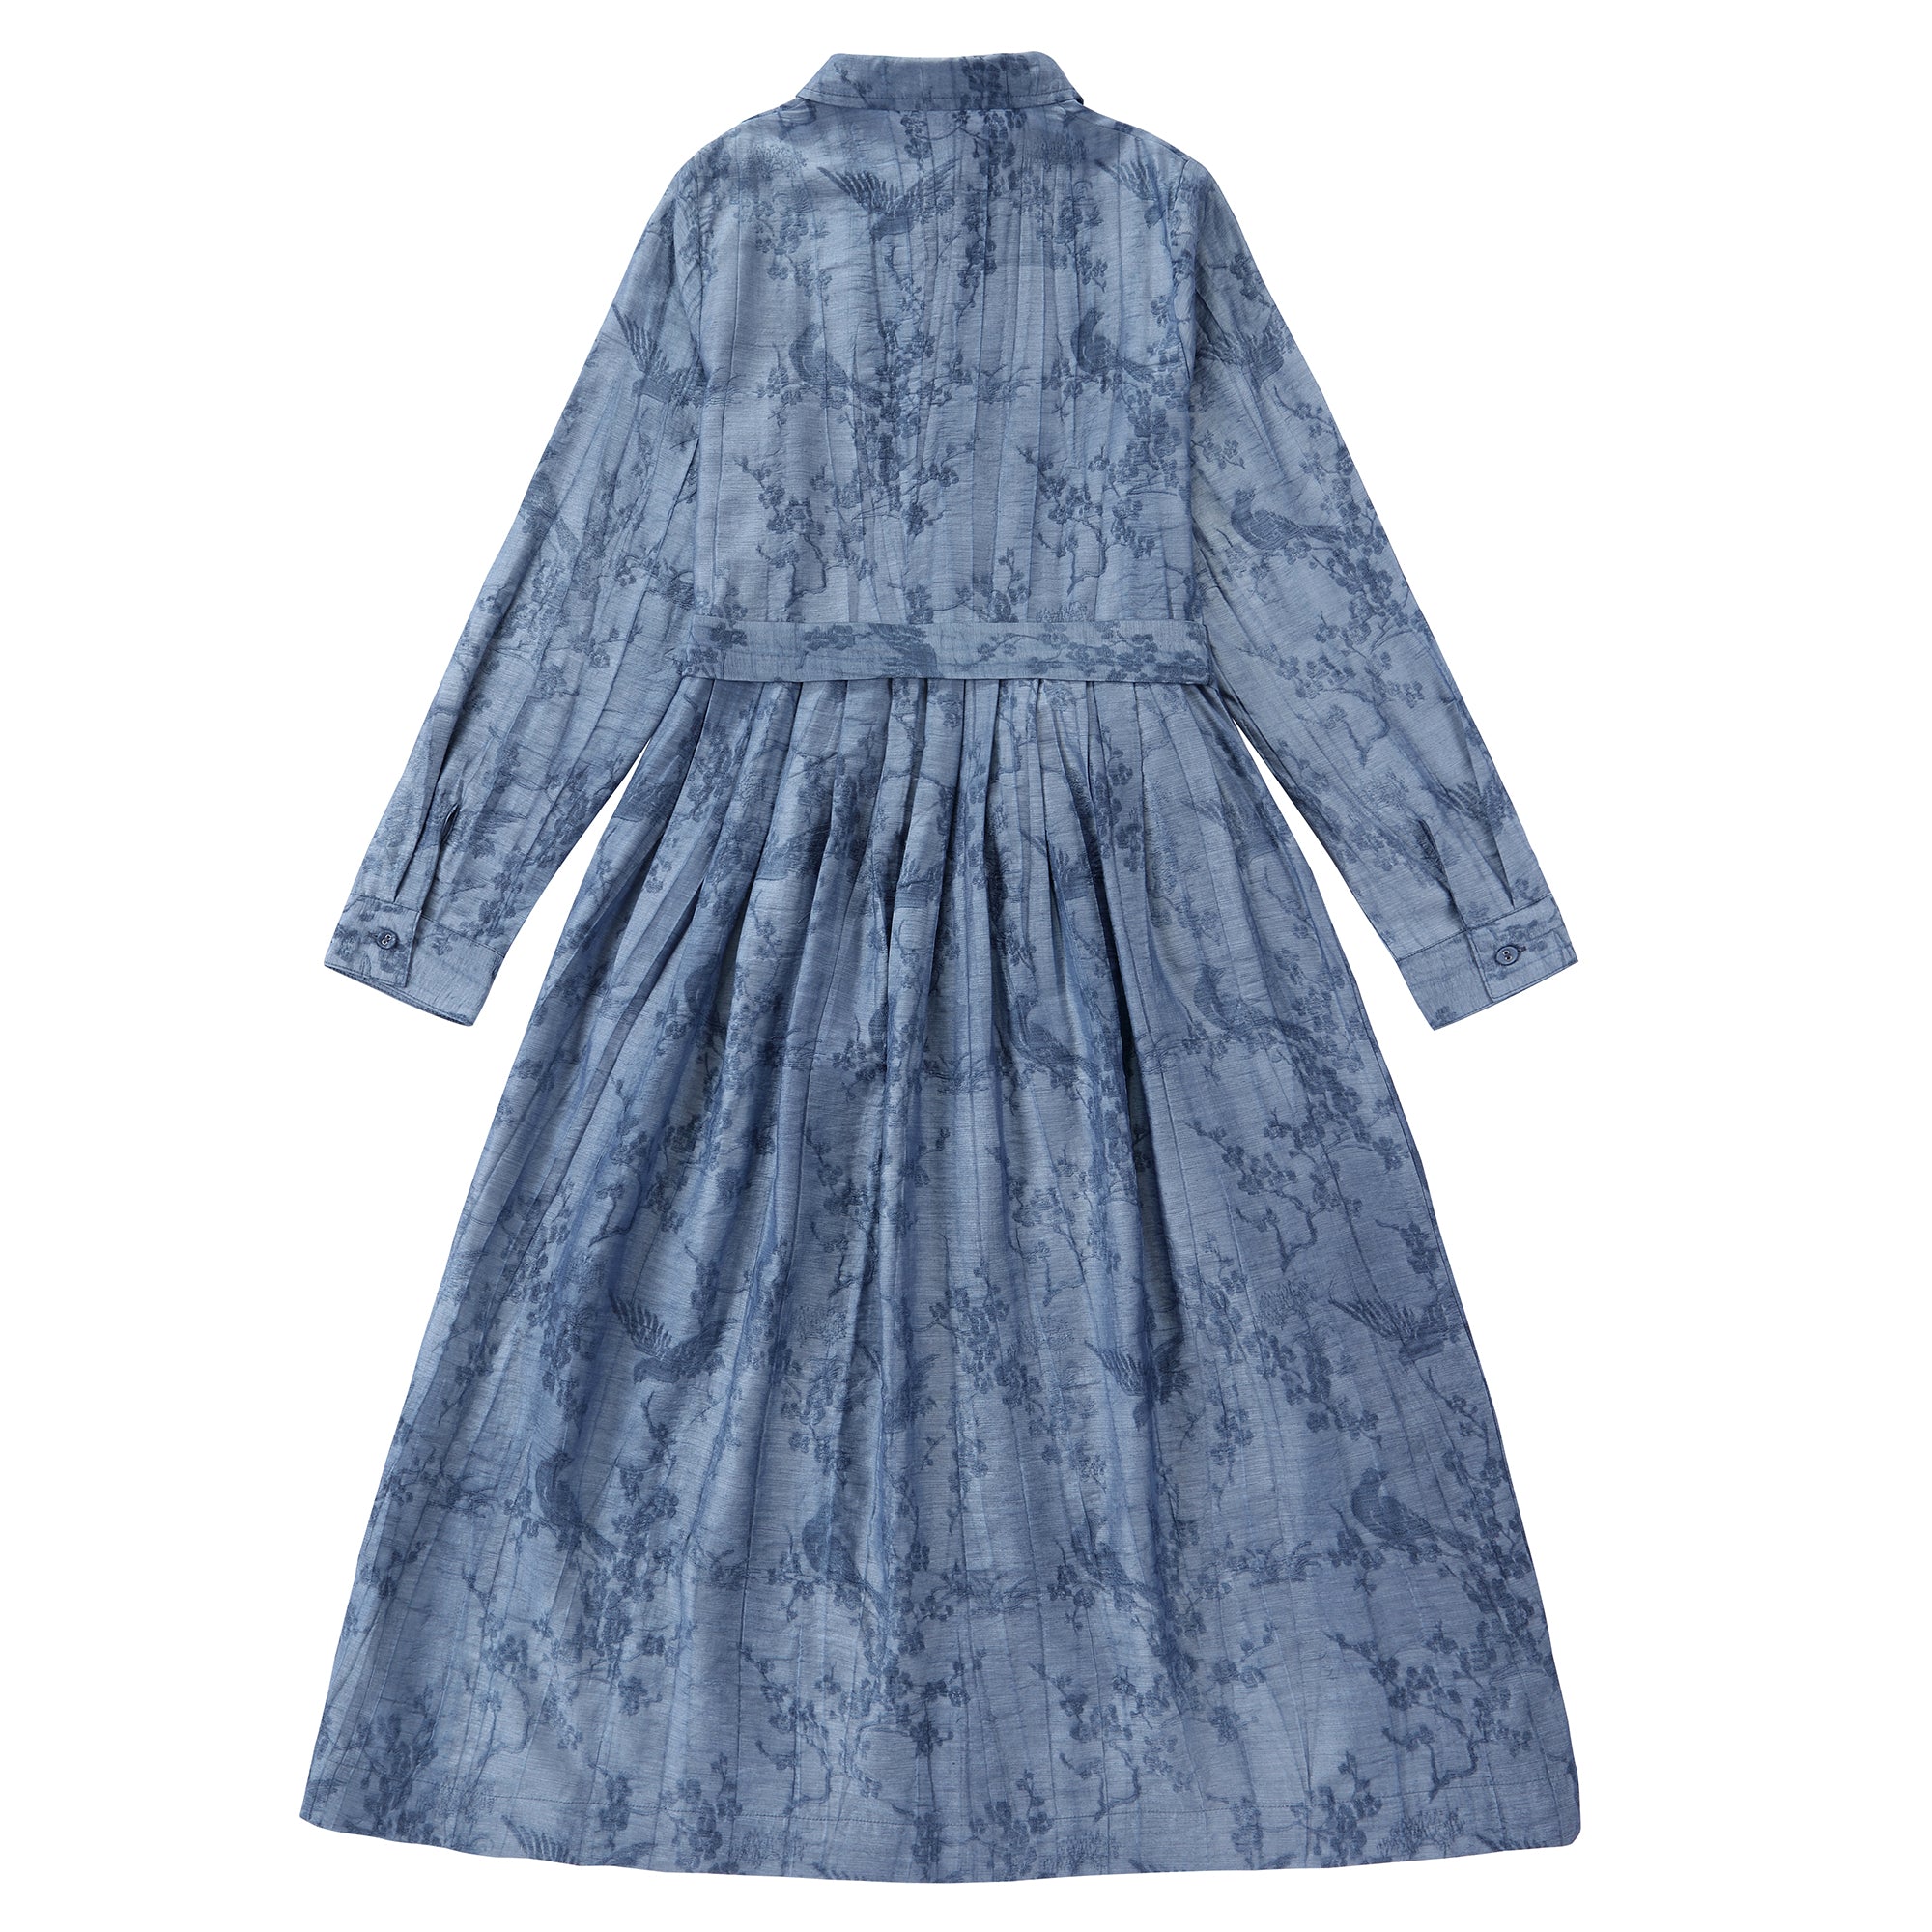 Textured Blue Floral Dress – Petit Clair